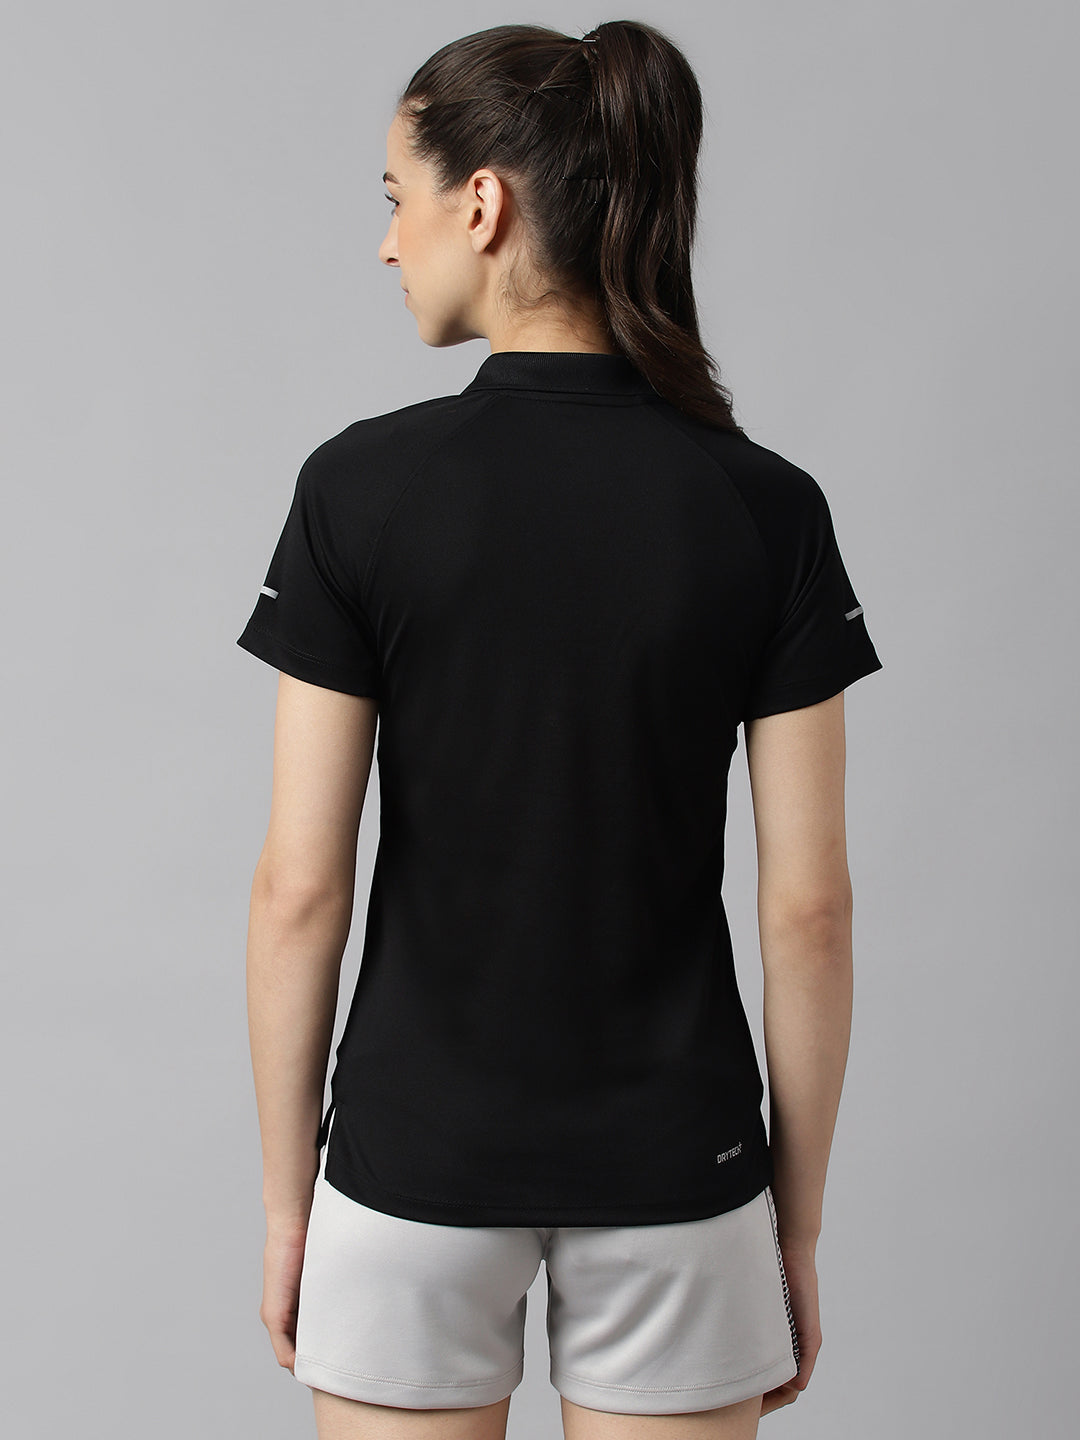 Alcis Women Black Tech-Fit Anti-Static Soft-Touch Slim-Fit Training Polo T-Shirt